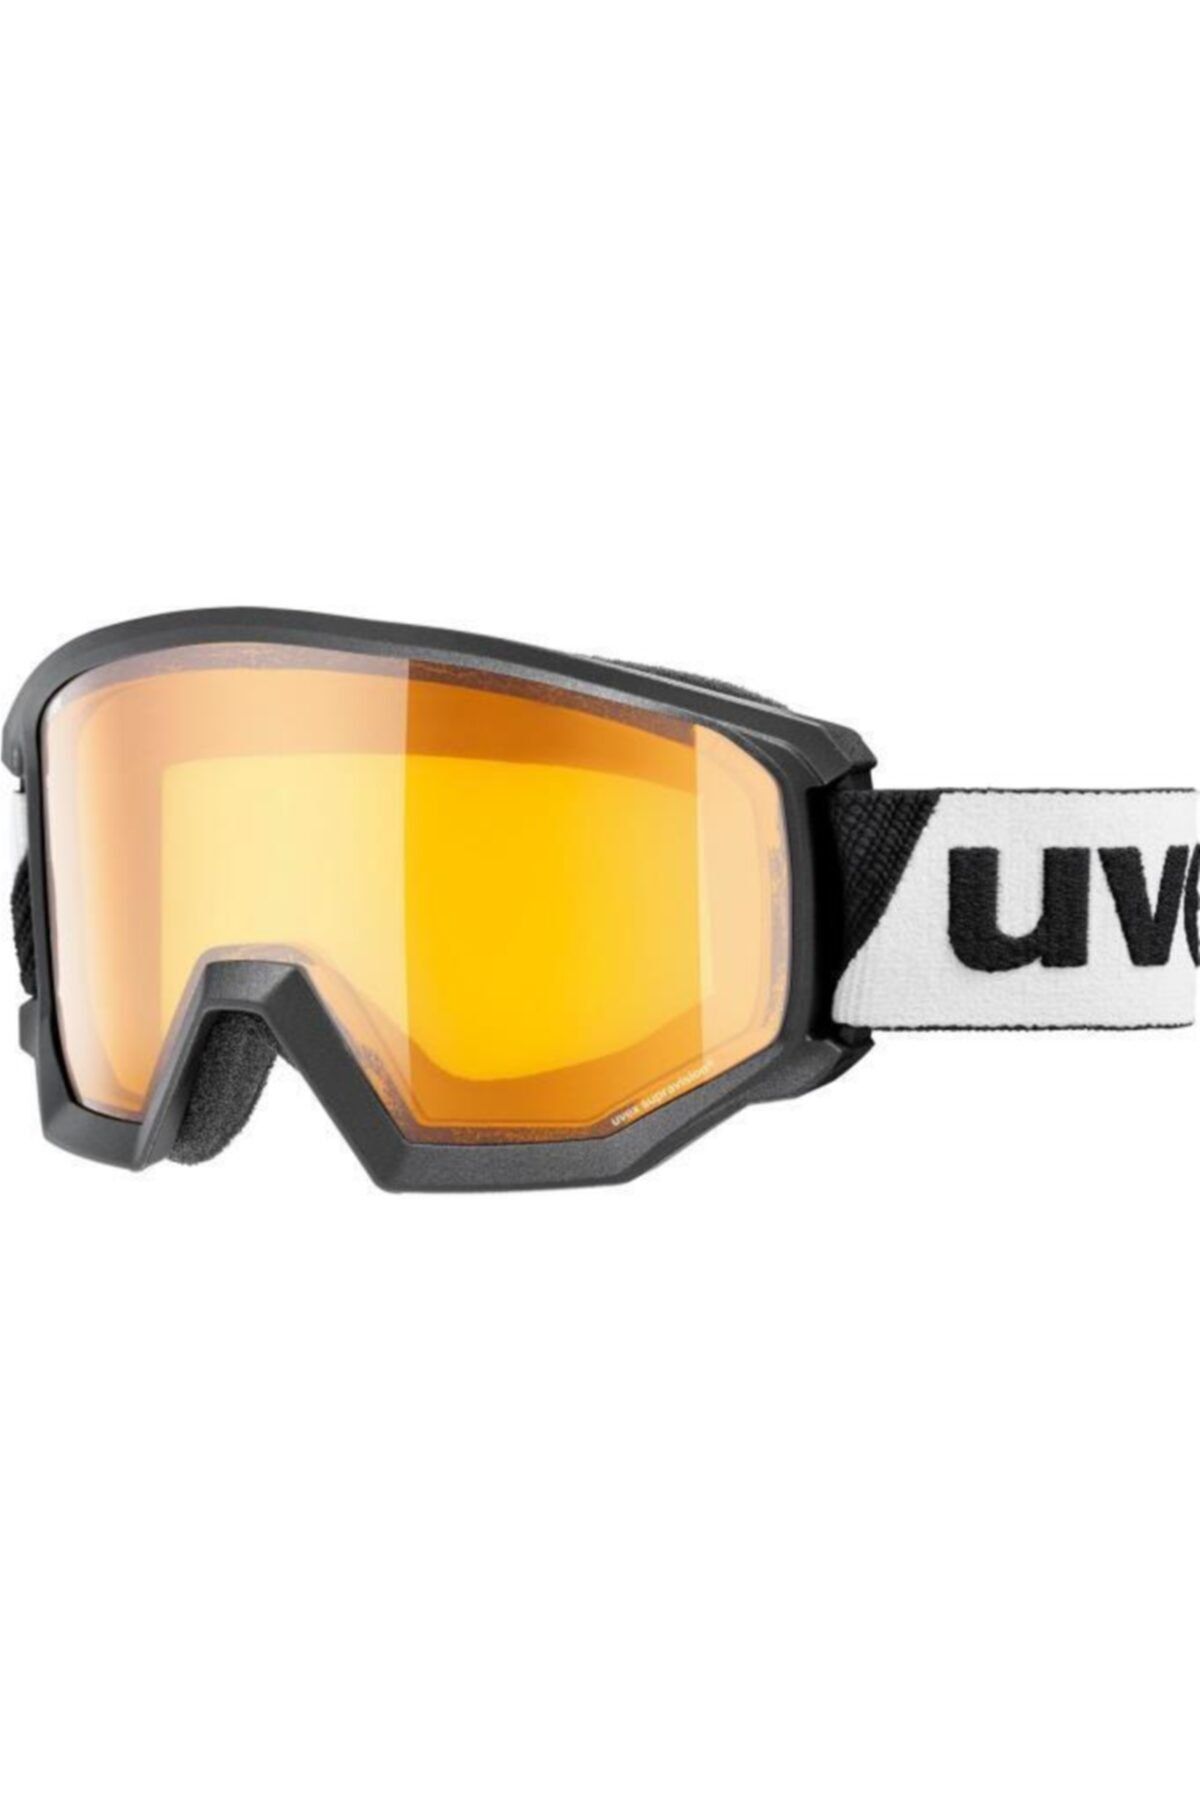 Uvex Athletic Lgl Siyah/mavi Kayak Gözlüğü